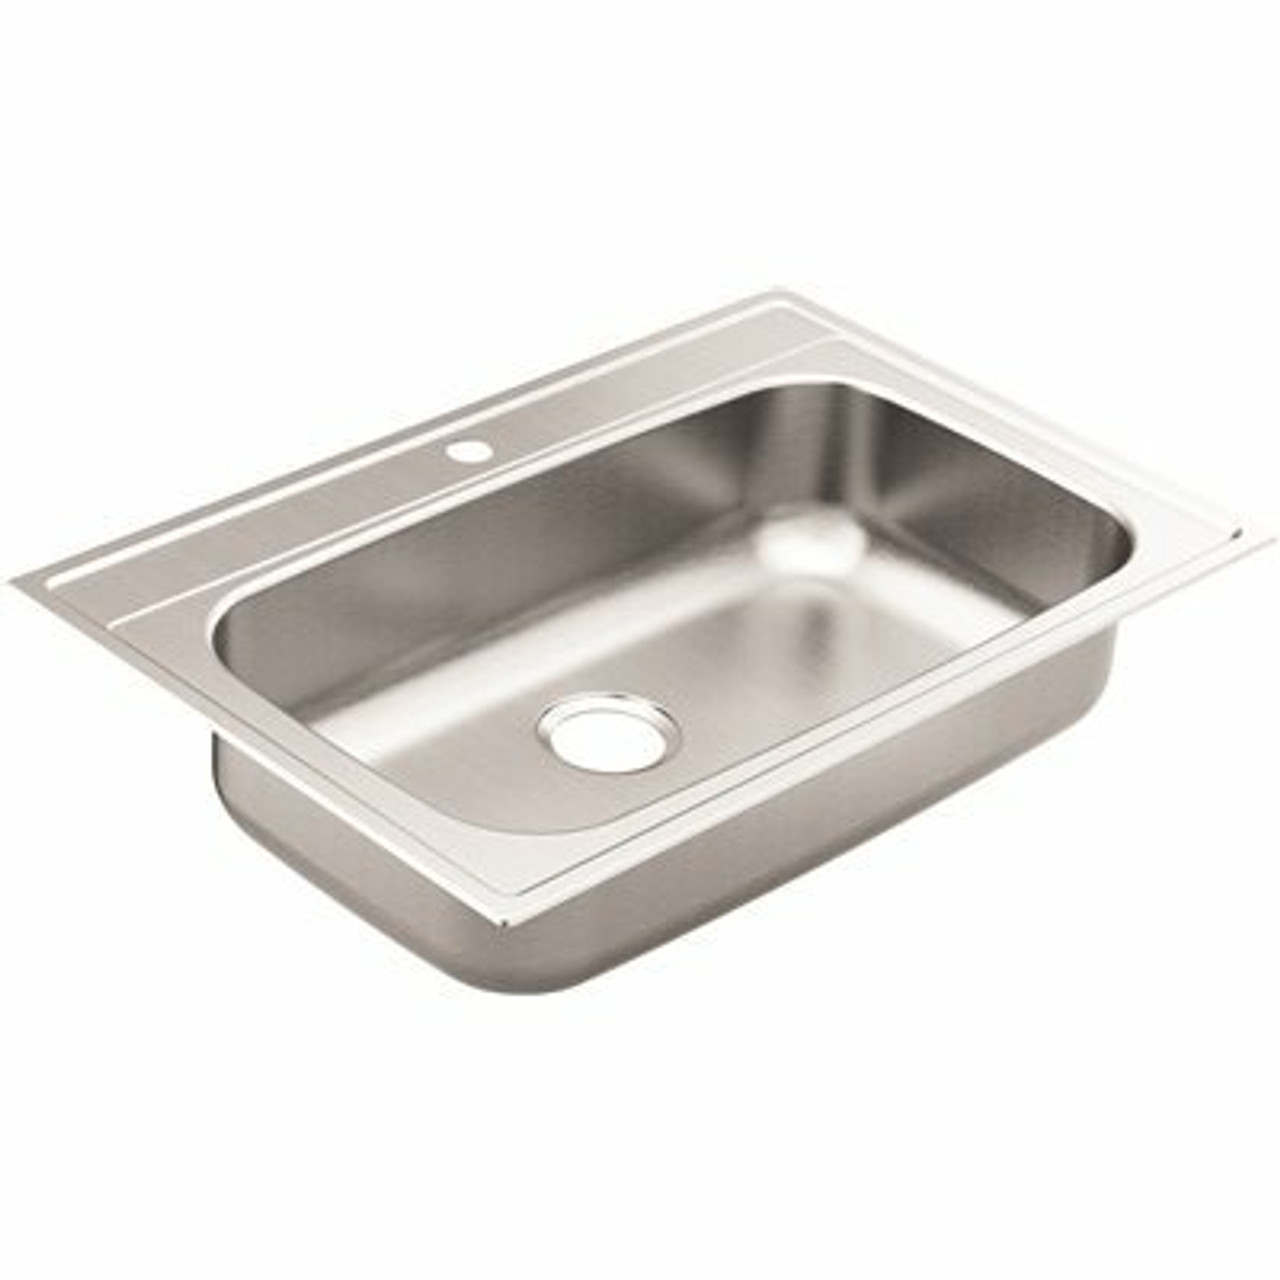 Moen 1800 Series Stainless Steel 33 In. 1-Hole Single Bowl Drop-In Kitchen Sink